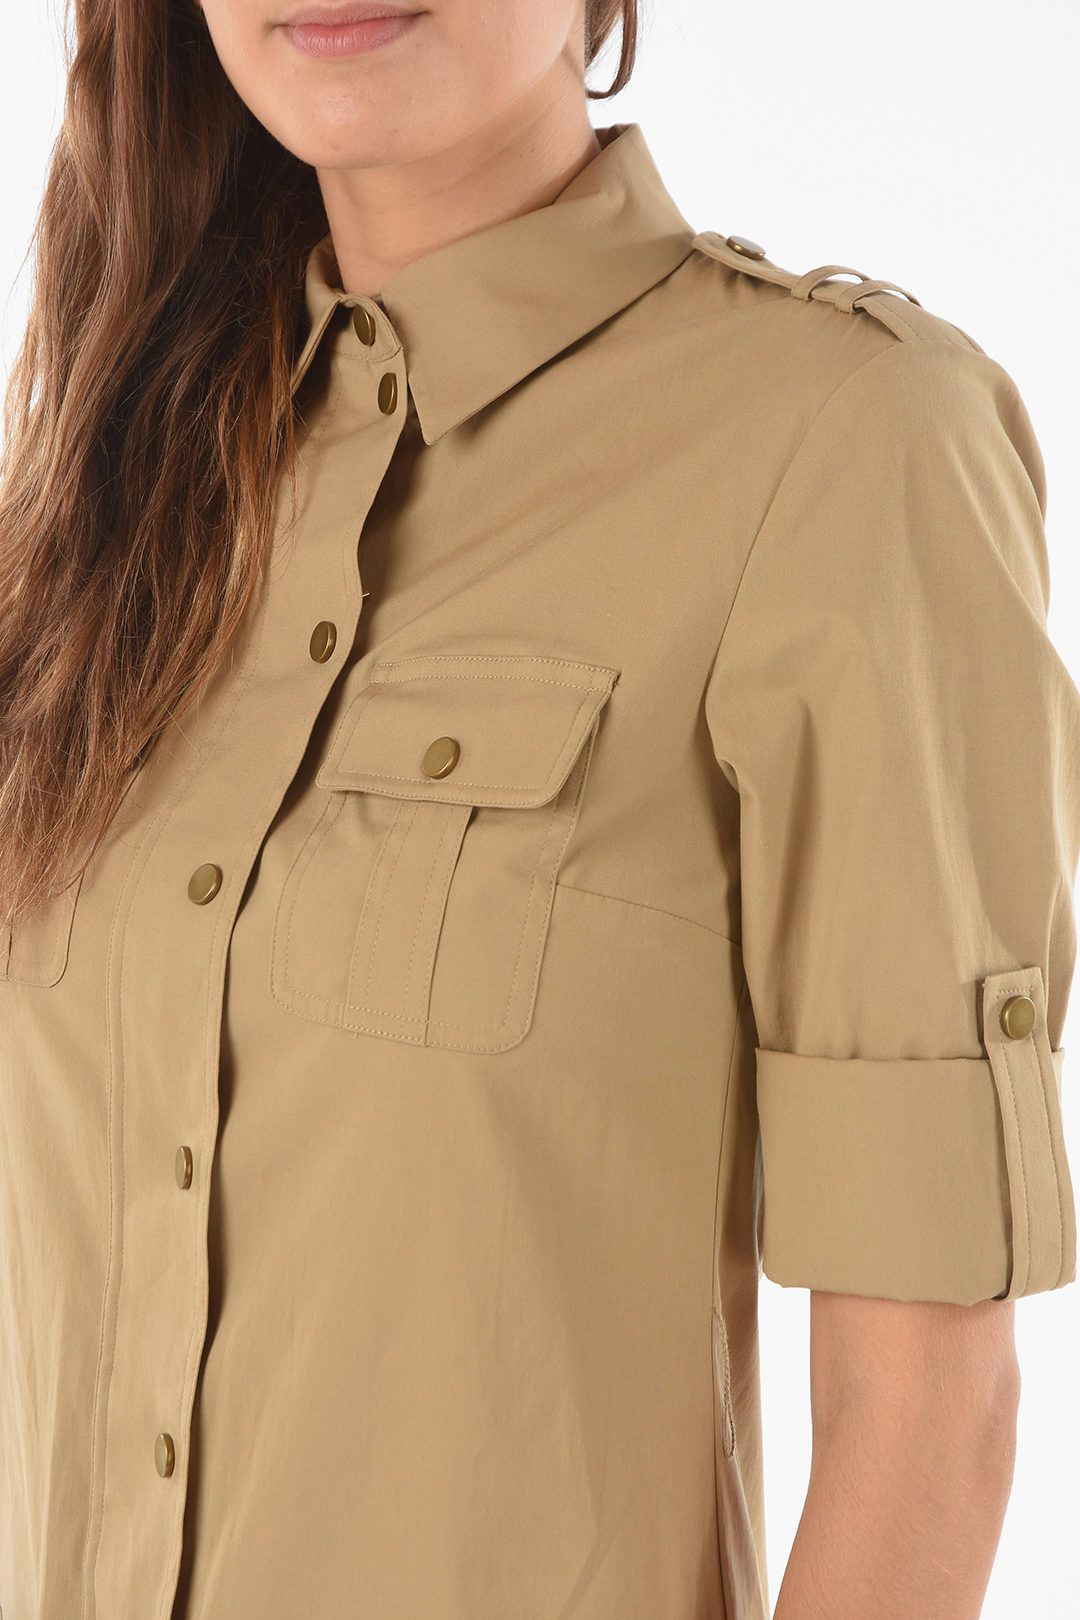 Michael Kors Snap Button Zipped Utility Shirt Dress women - Glamood Outlet